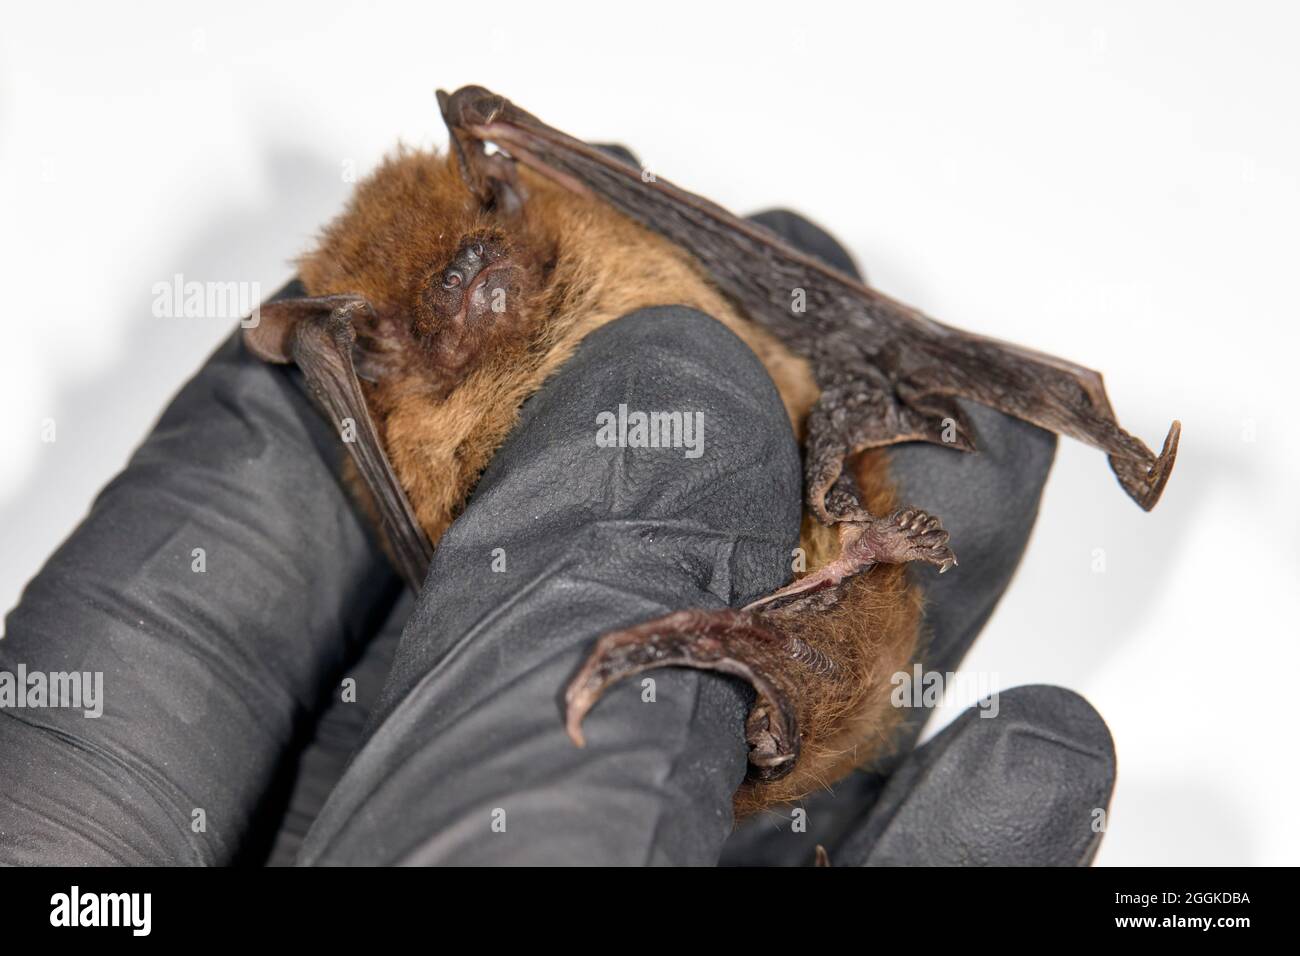 Bat, research, caught, hand Stock Photo